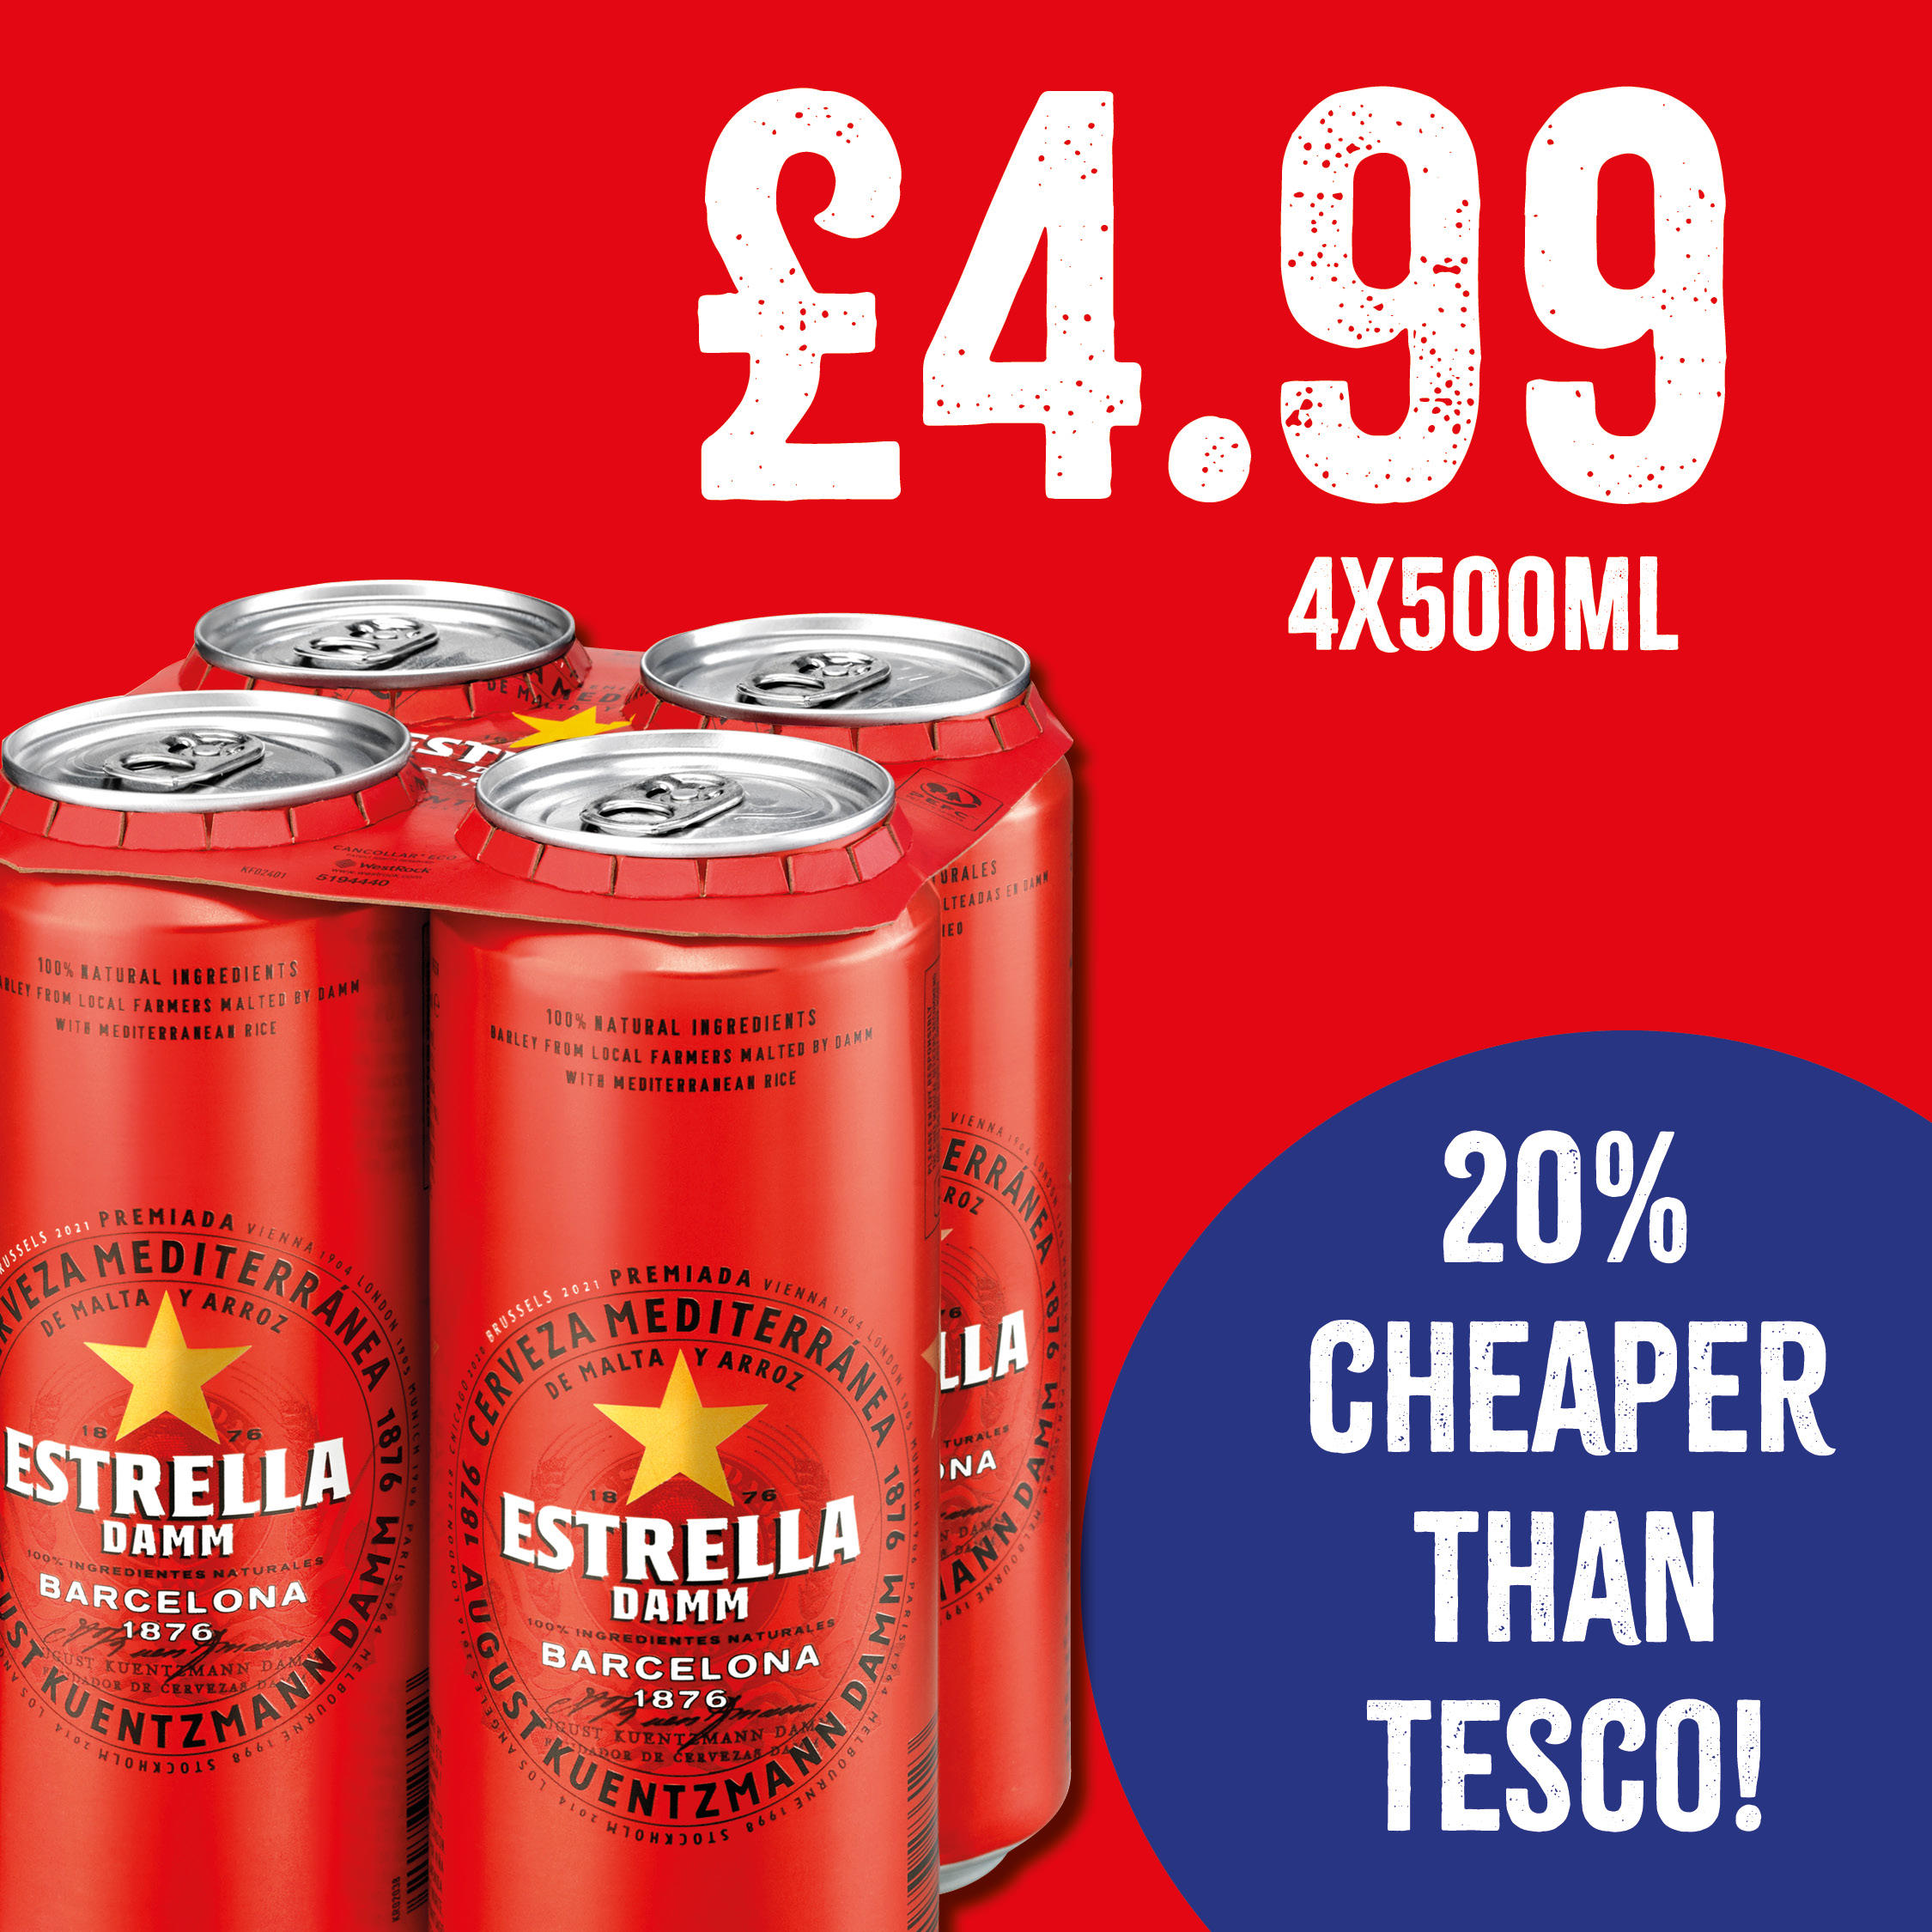 Estrella 4 x 500ml - Only £4.99 
20% Cheaper than Tesco Bargain Booze Holmes Chapel 01477 537193